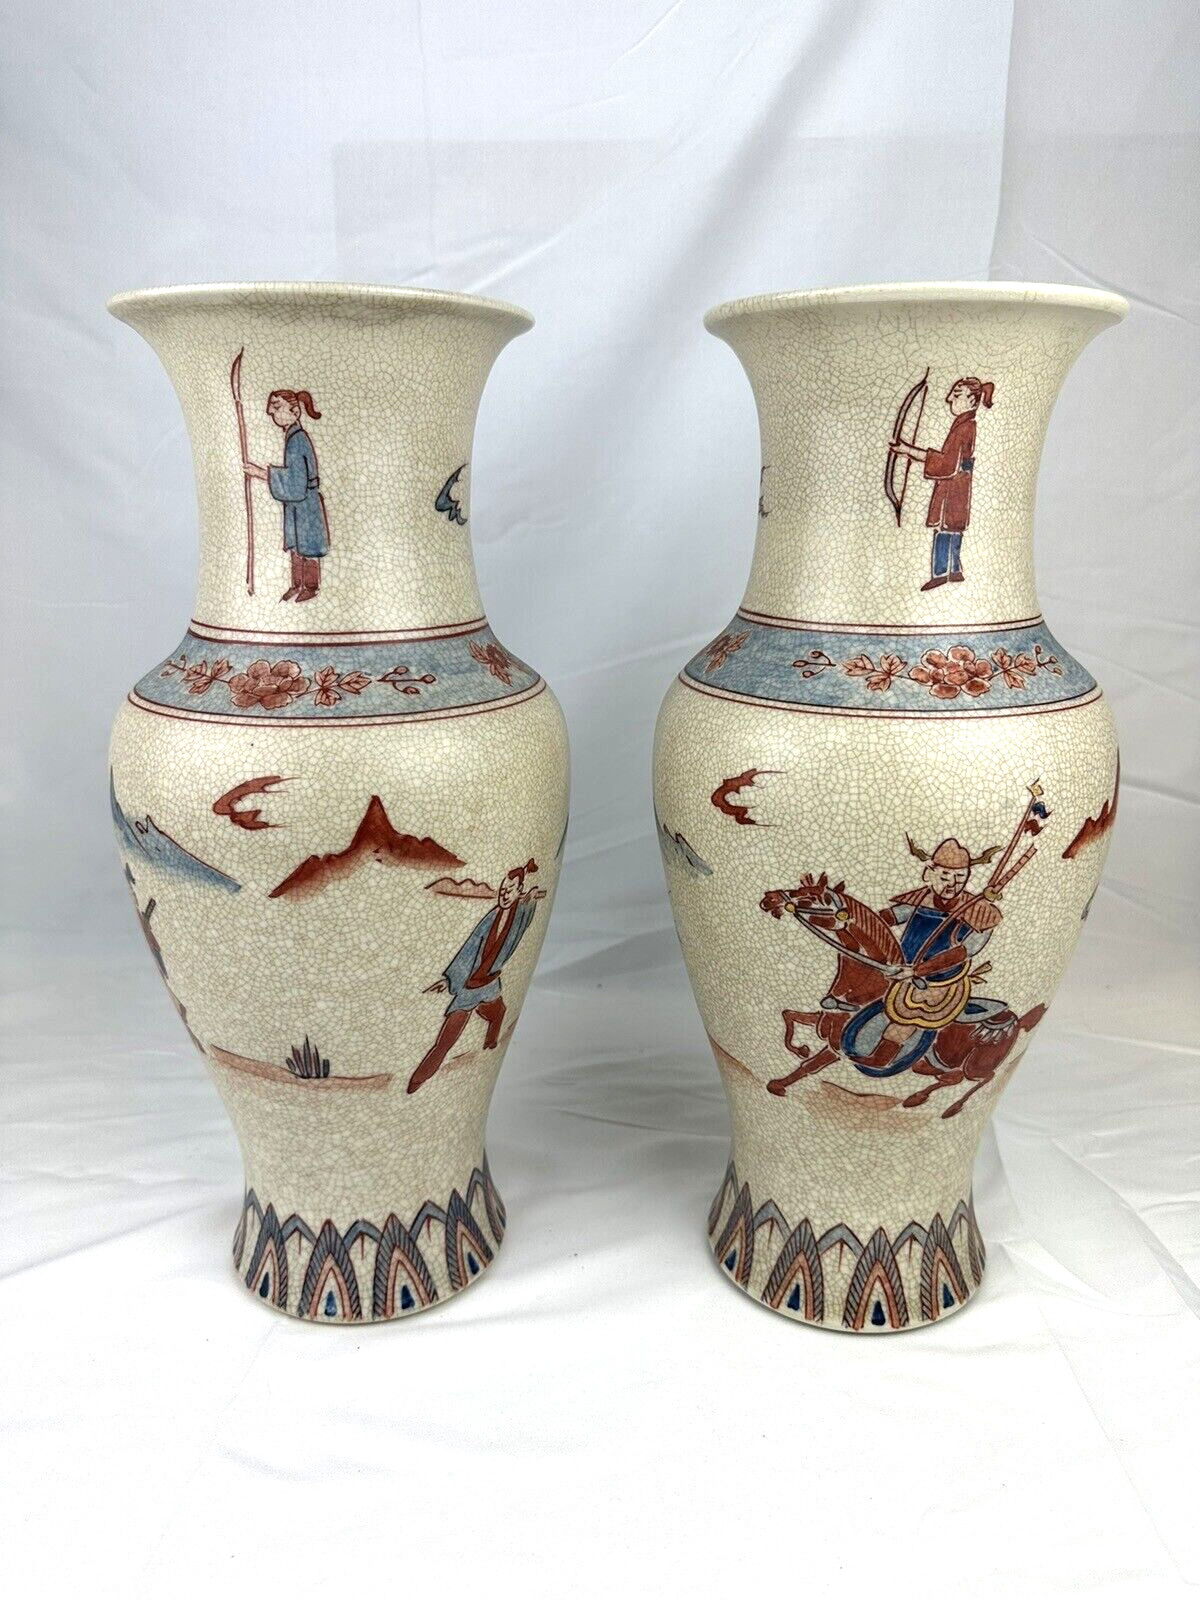 A Pair of Vtg Asian Decorative Vases Riding Warriors Crackled Glaze Home Decor